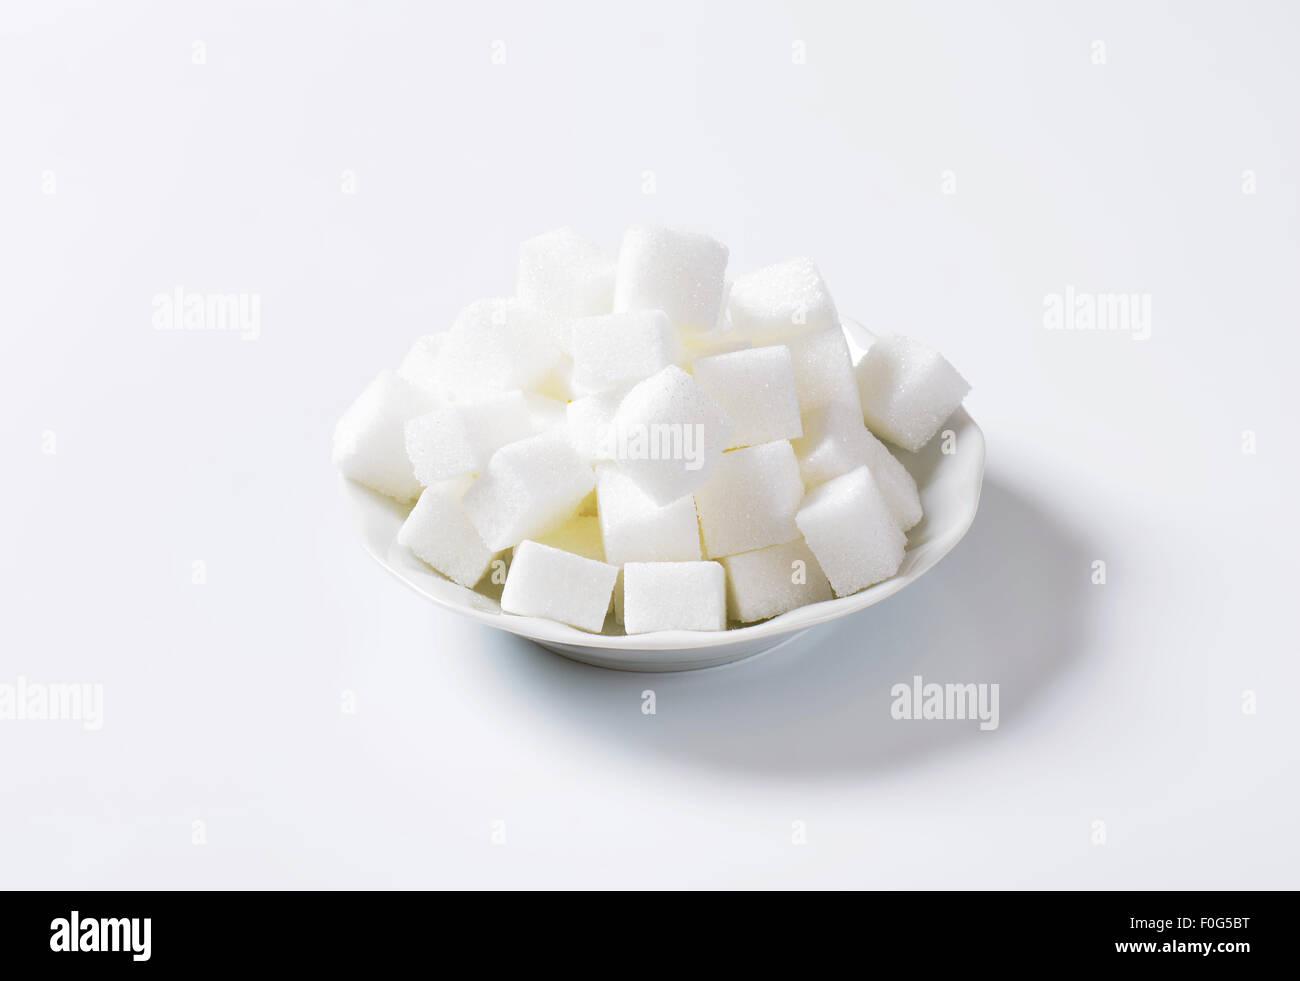 Pile of white sugar cubes Stock Photo - Alamy